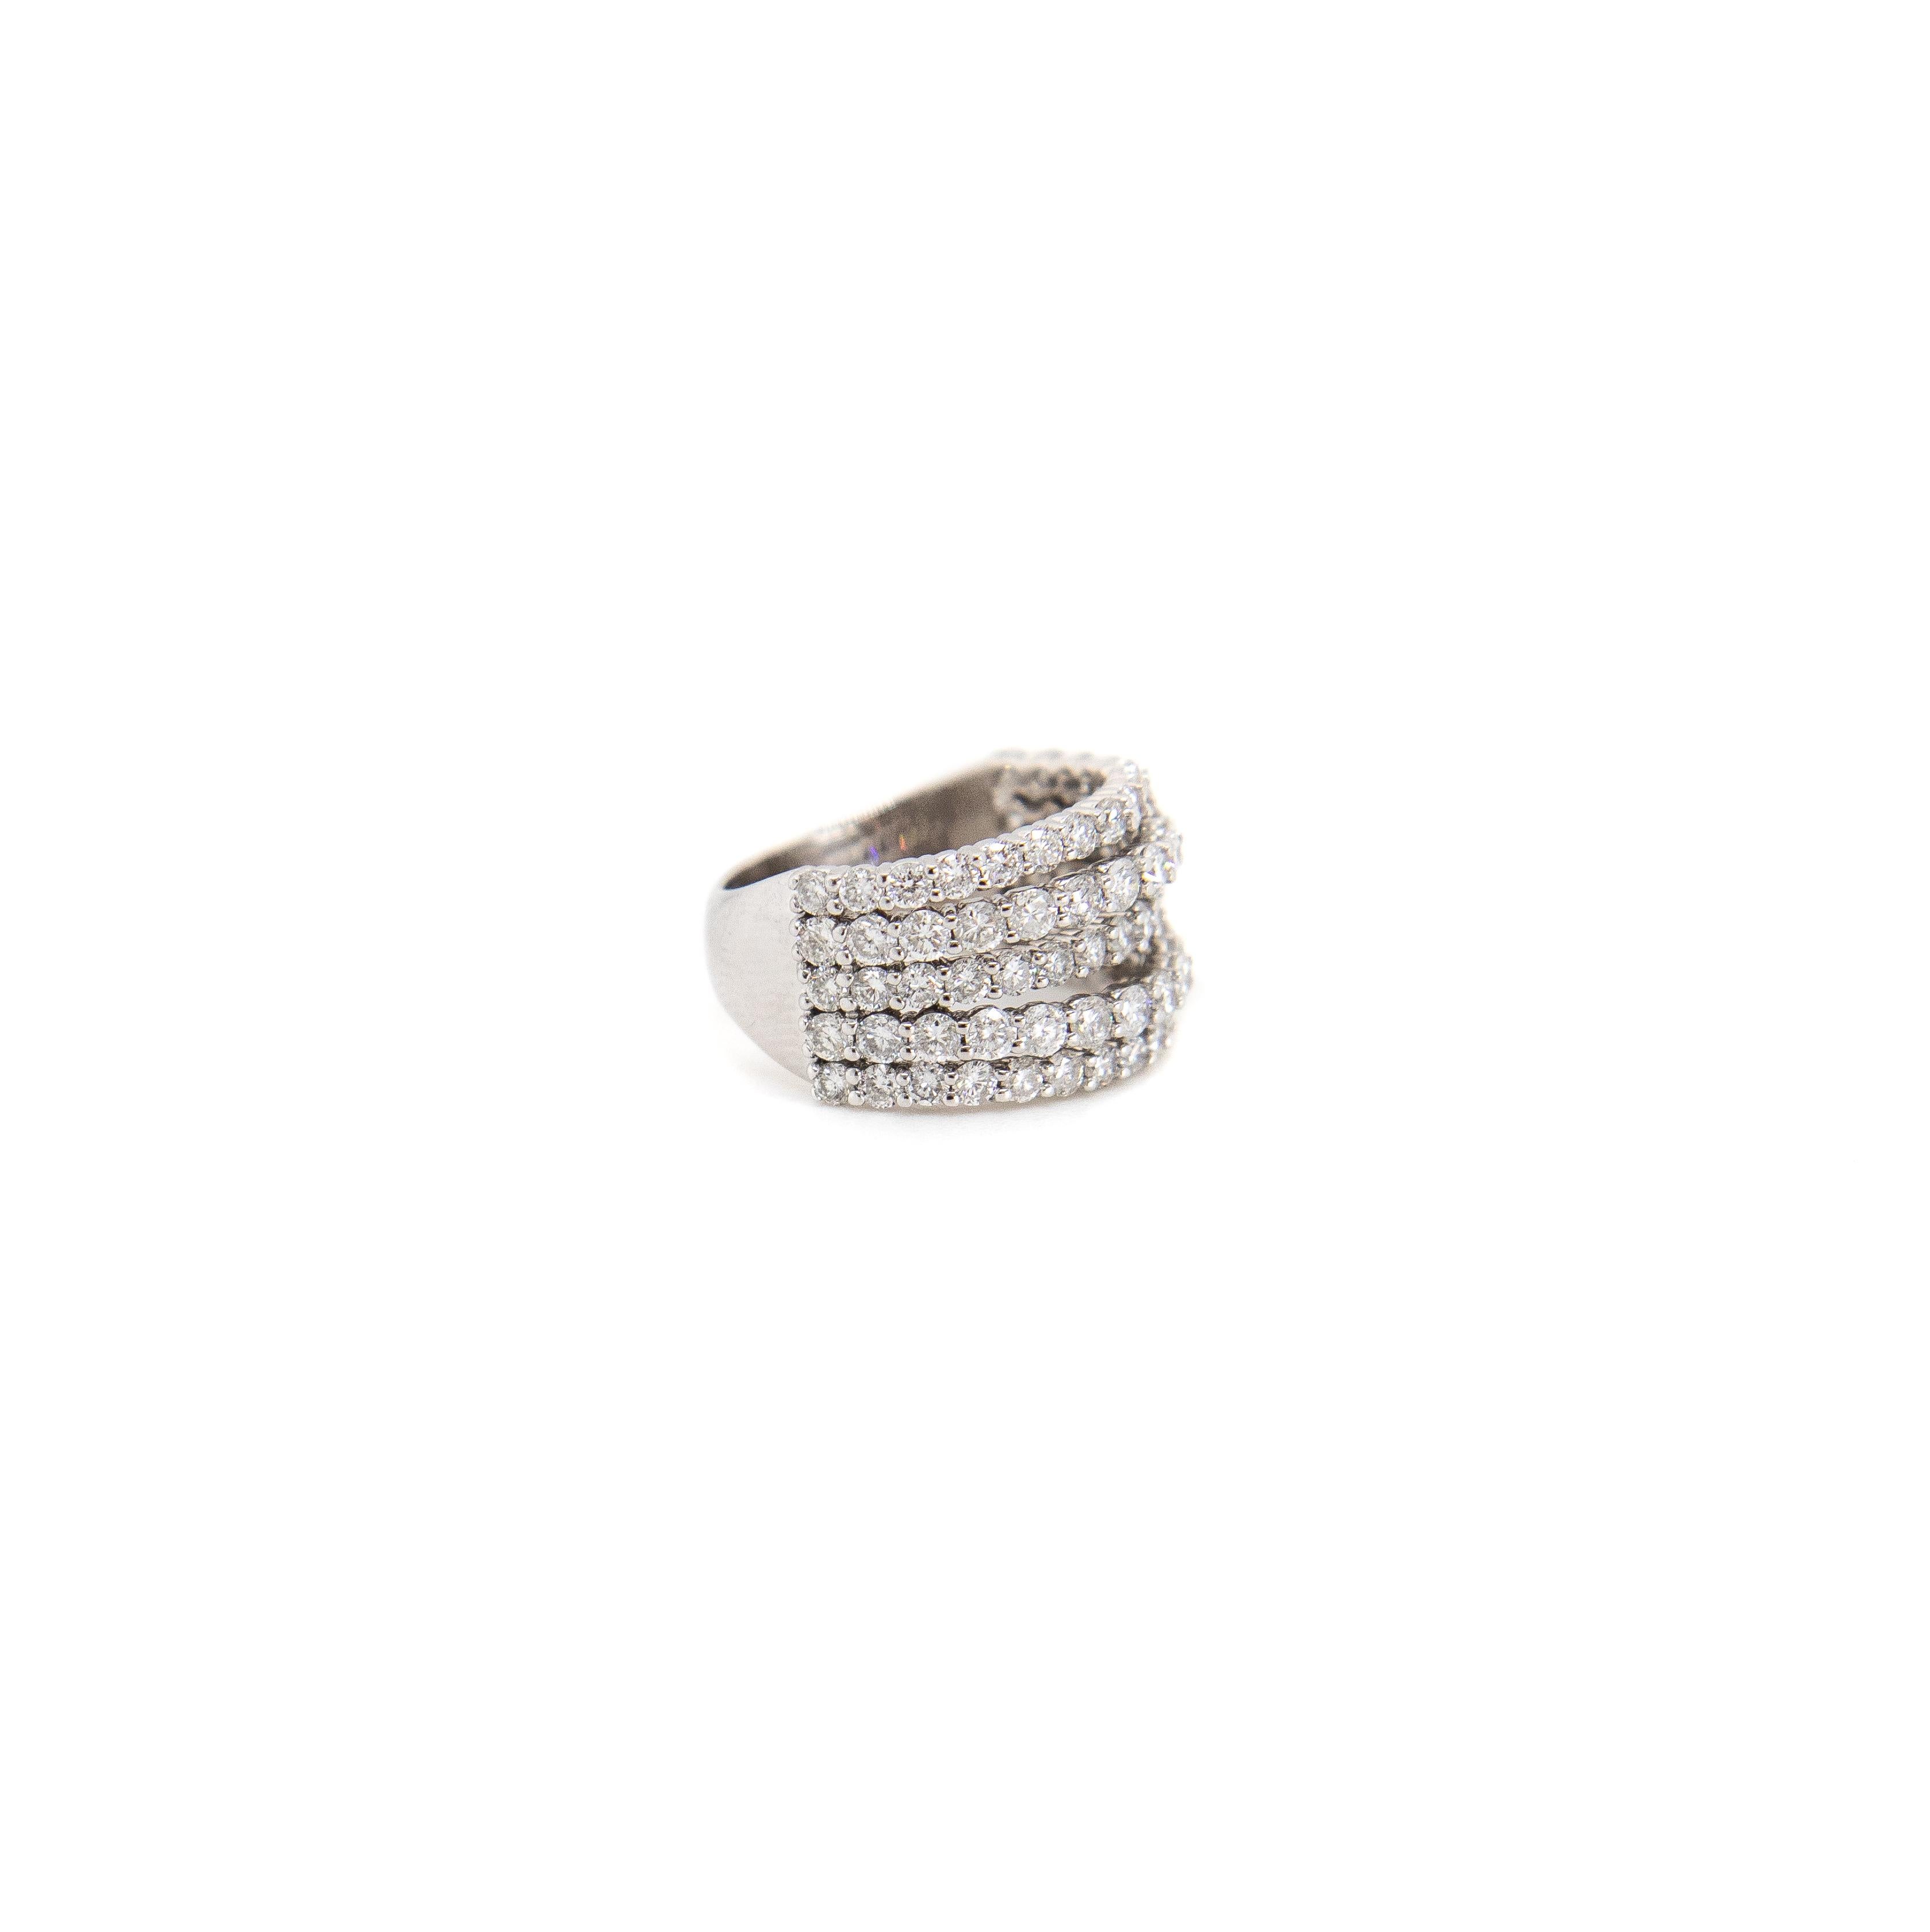 For Sale:  5 Row Diamond Ring 6